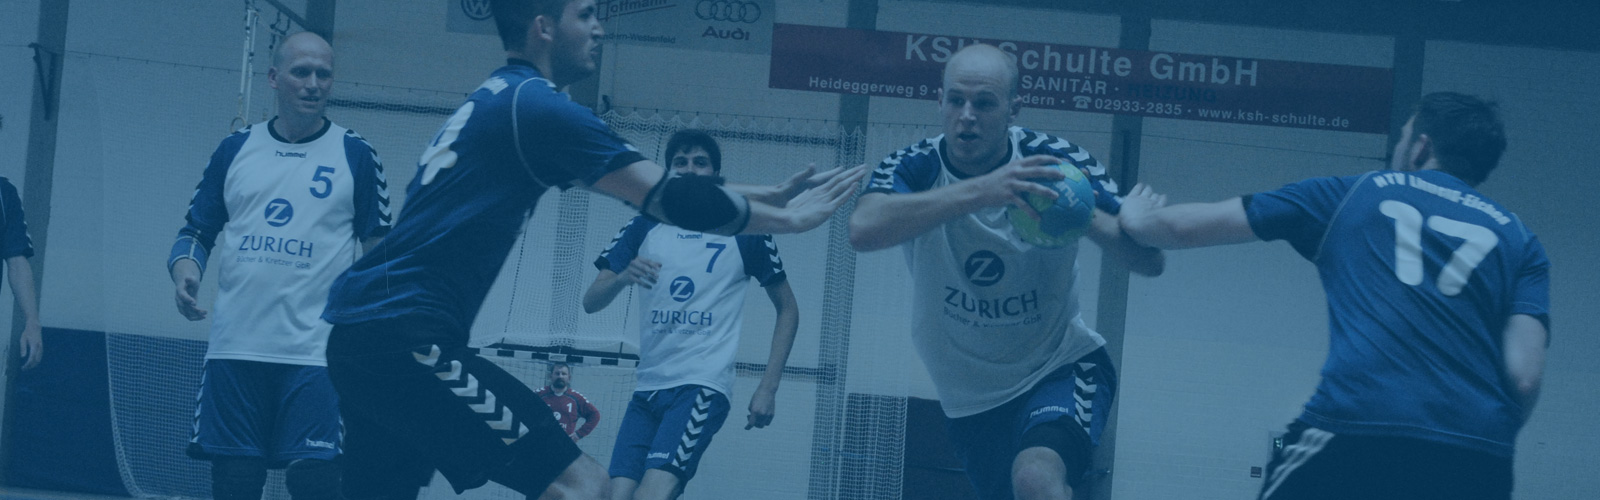 Handball Verein Sundern